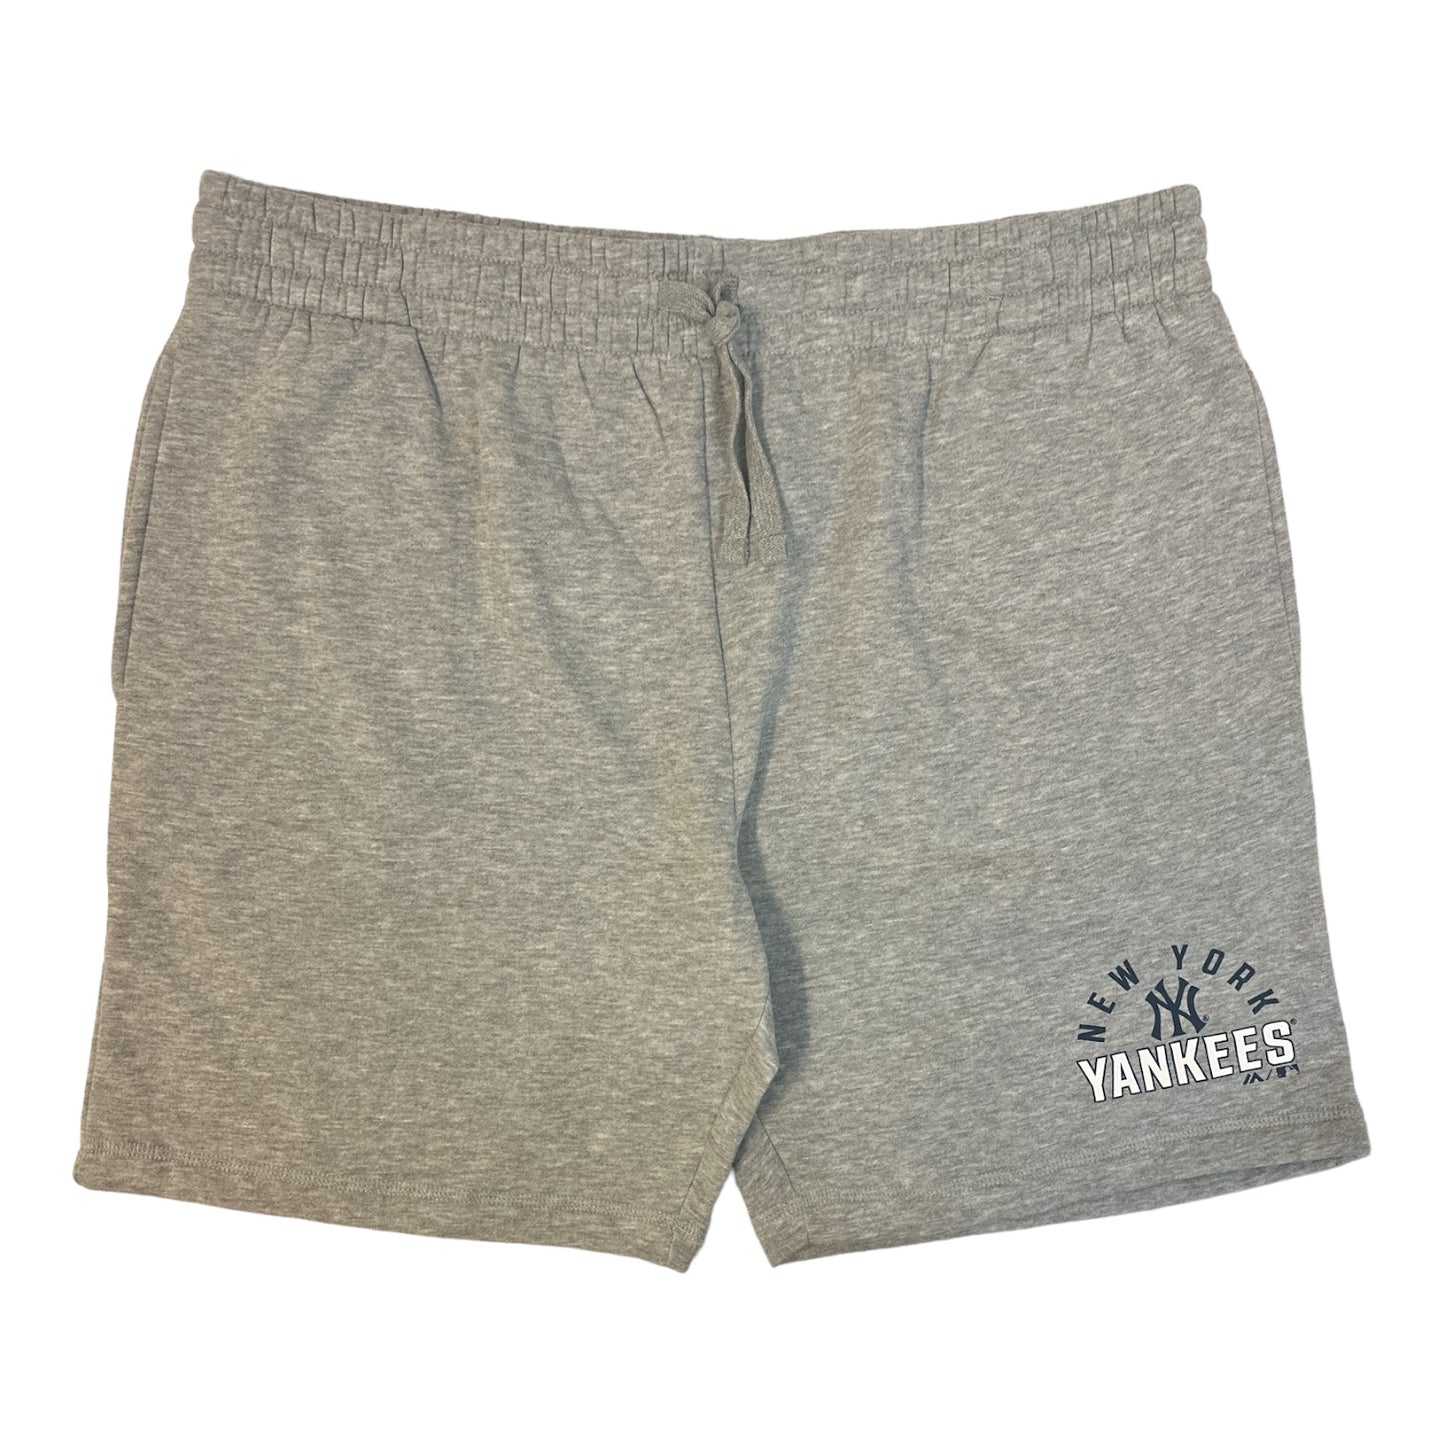 Majestic Men's NY Yankee's Adjustable Waist Soft Fleece Lined Lounge Shorts